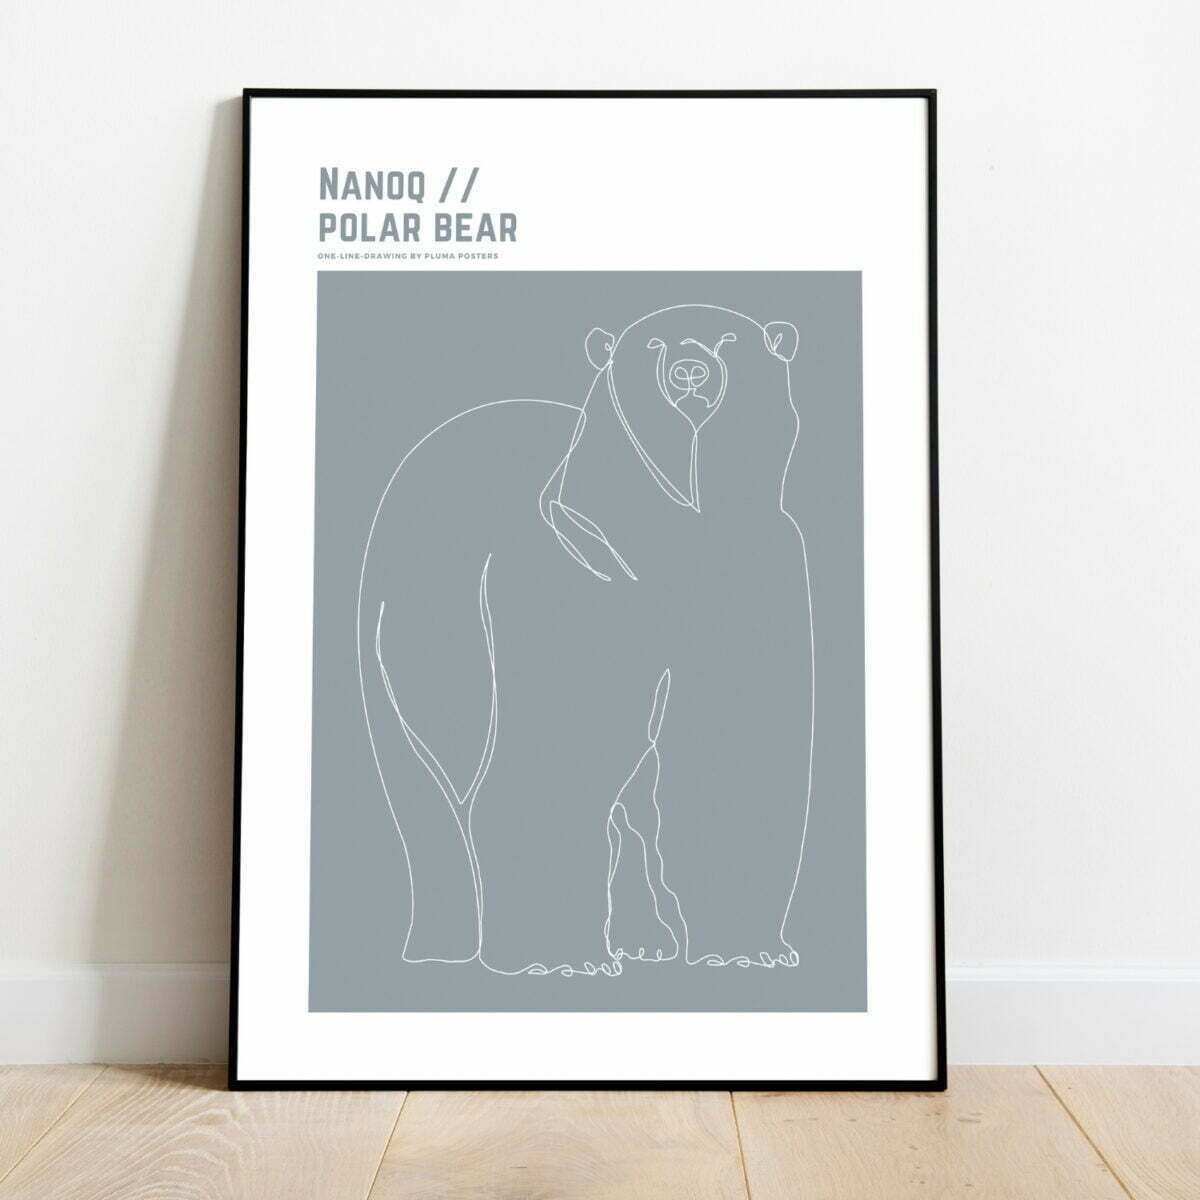 Nanoq//Polar bear plakat